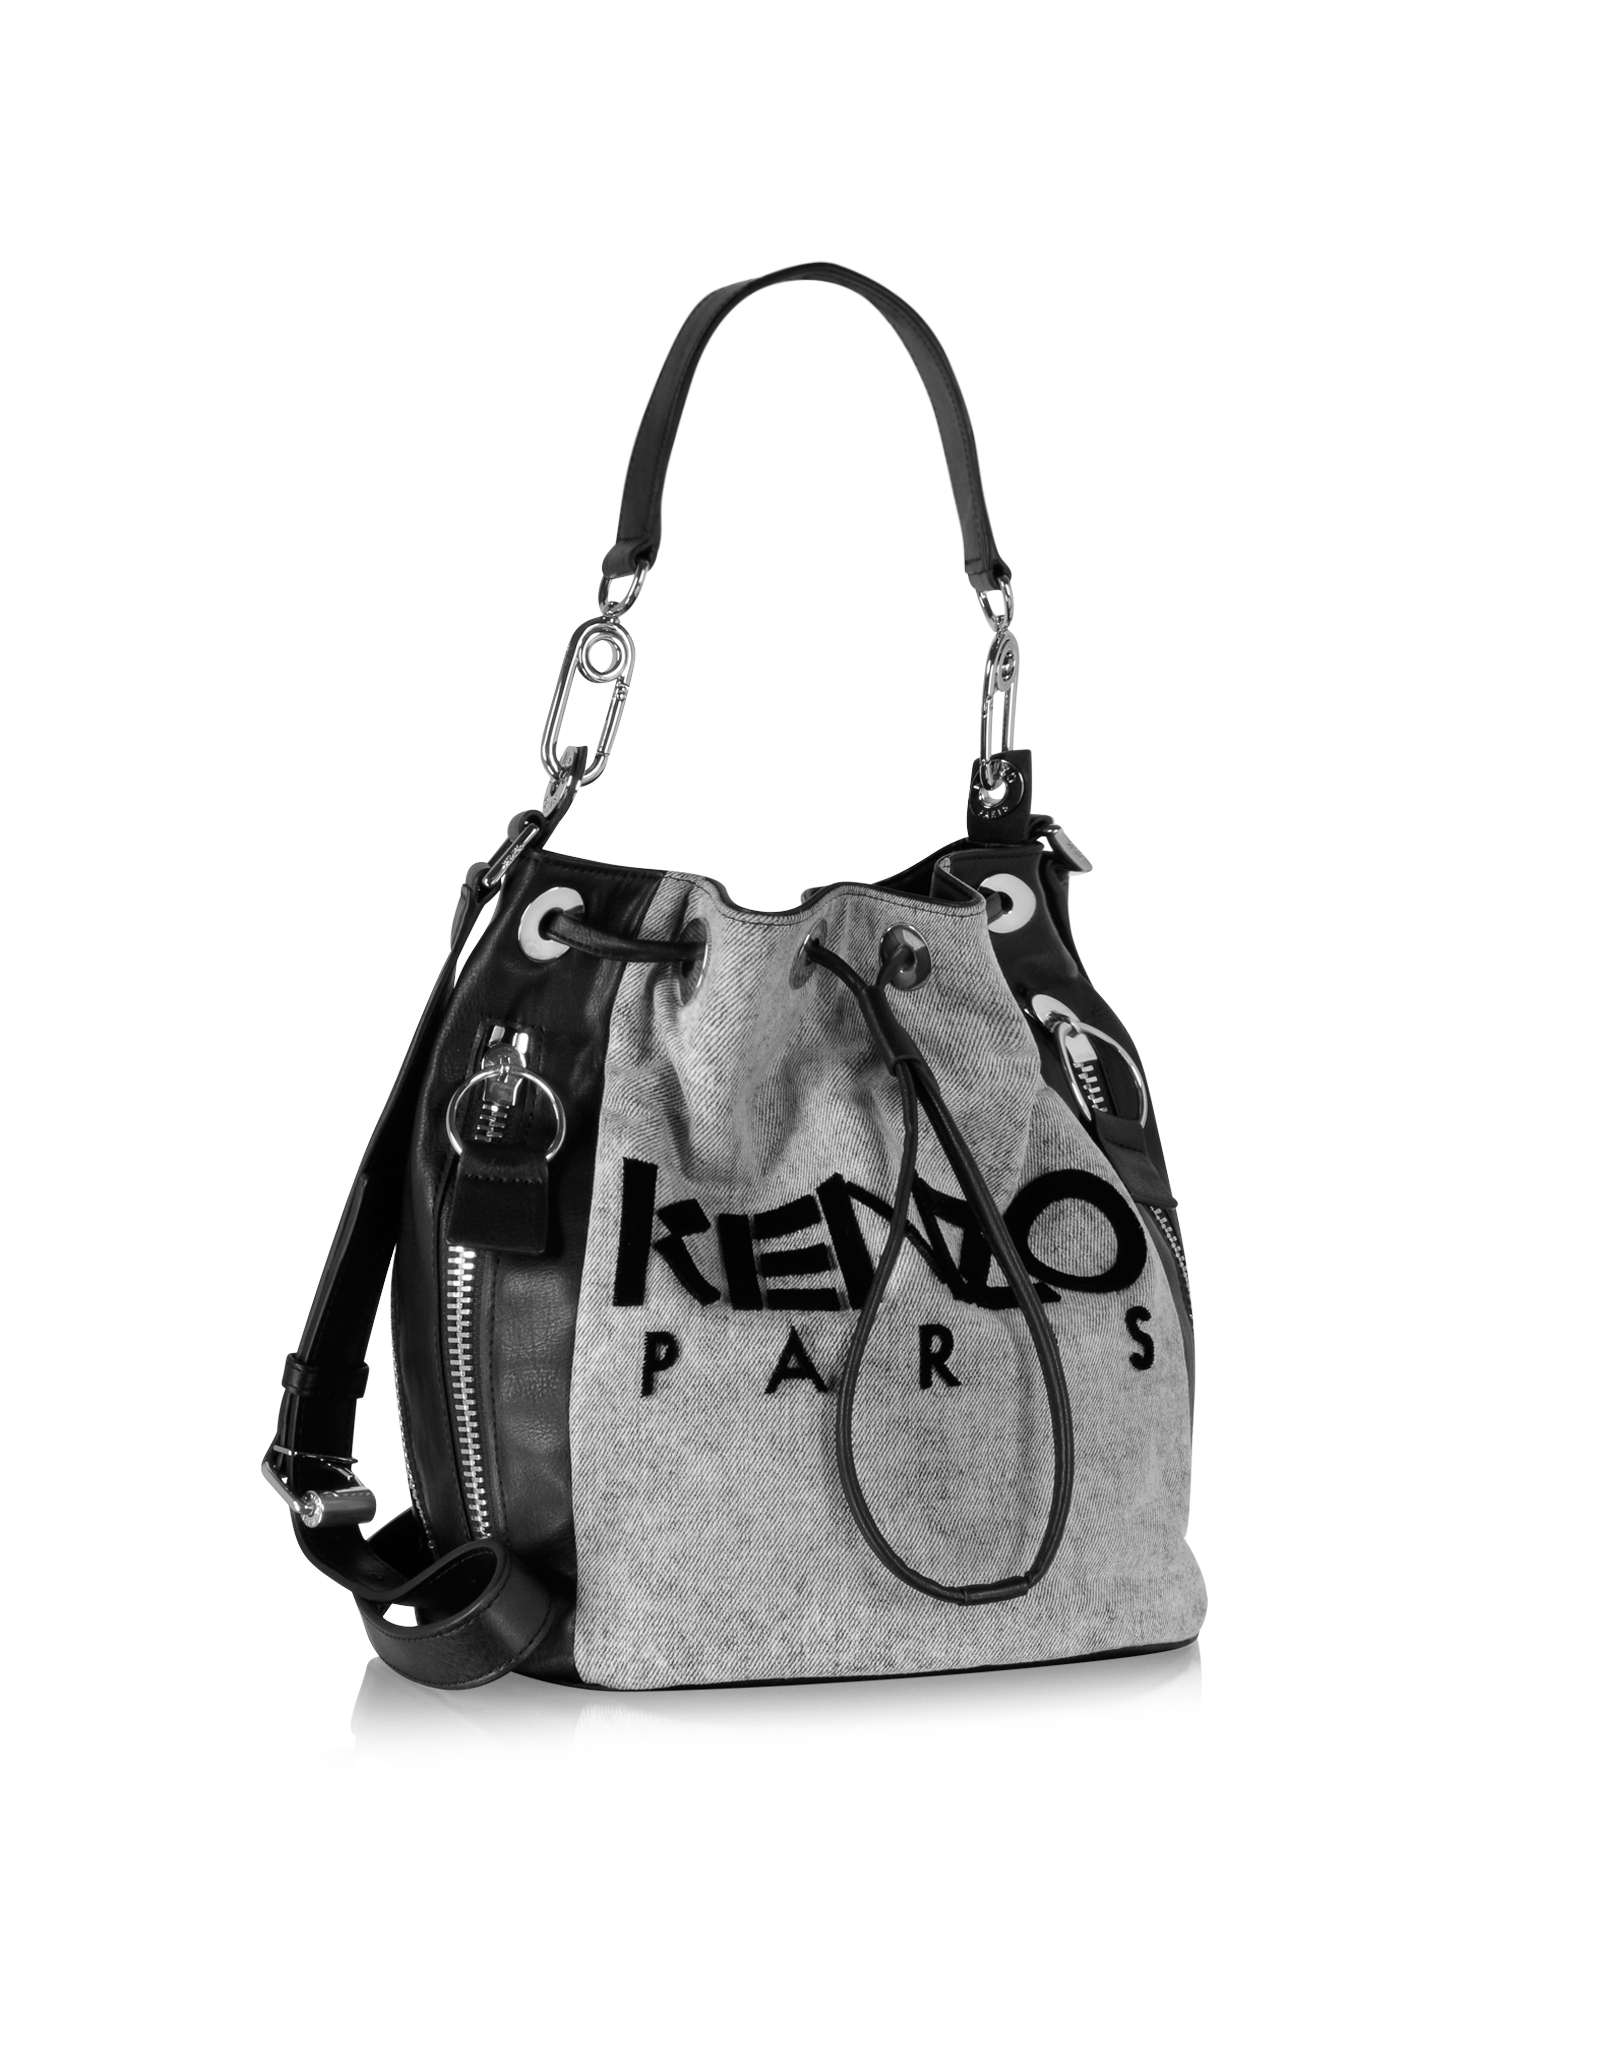 KENZO Kanvas Bucket Bag in Silver (Black) - Lyst